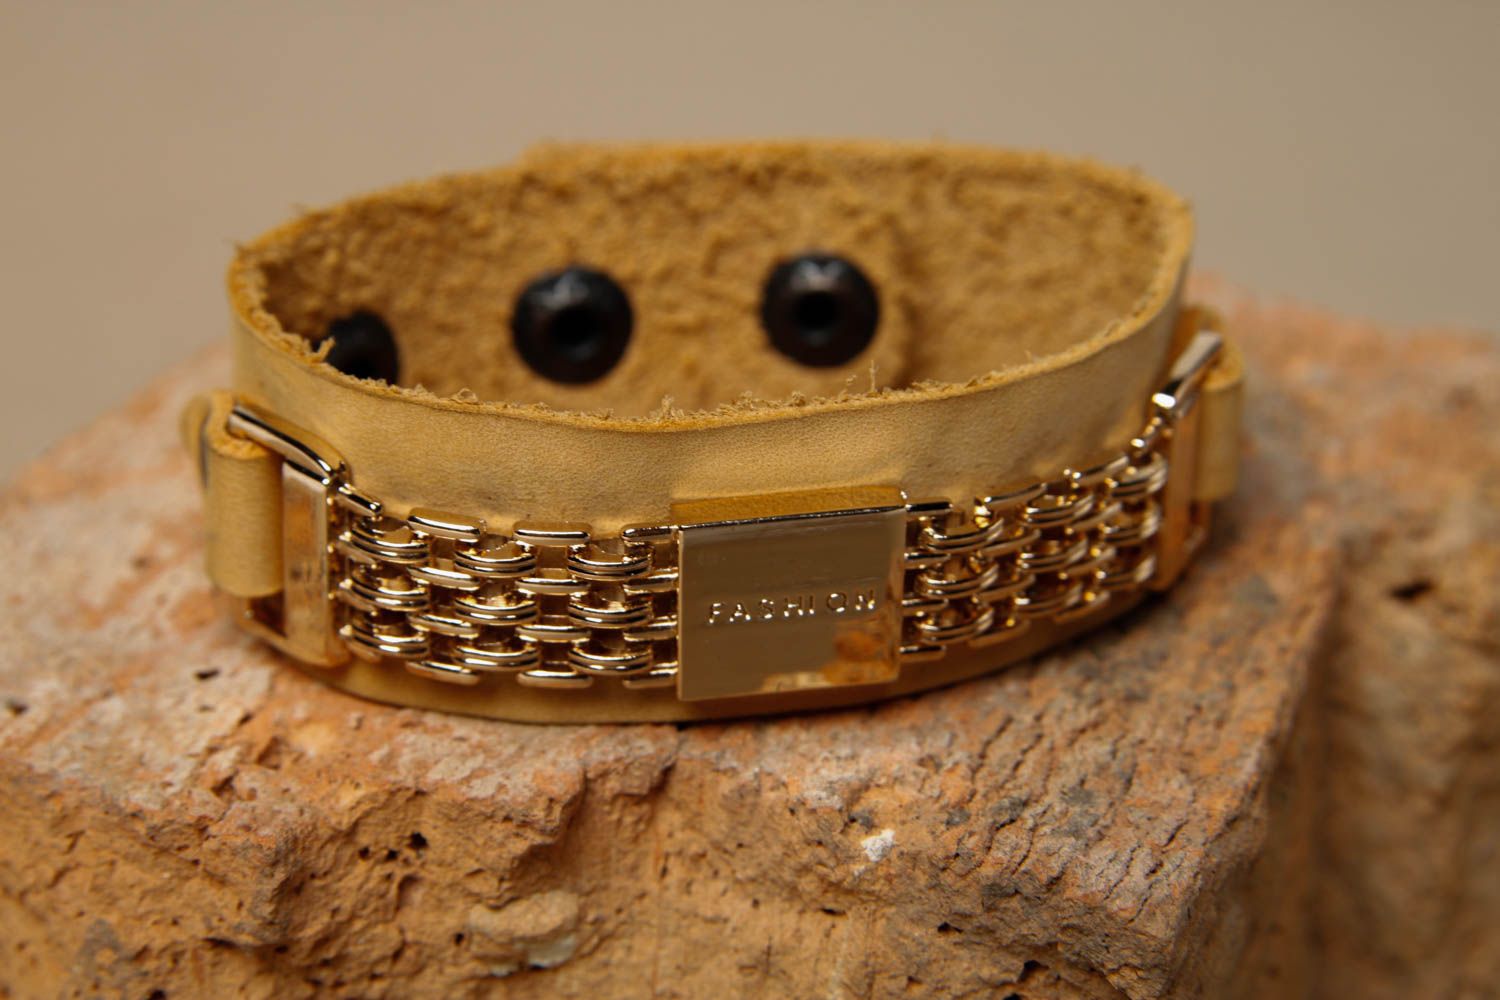 Beautiful handmade wrist bracelet designs leather goods fashion accessories photo 1